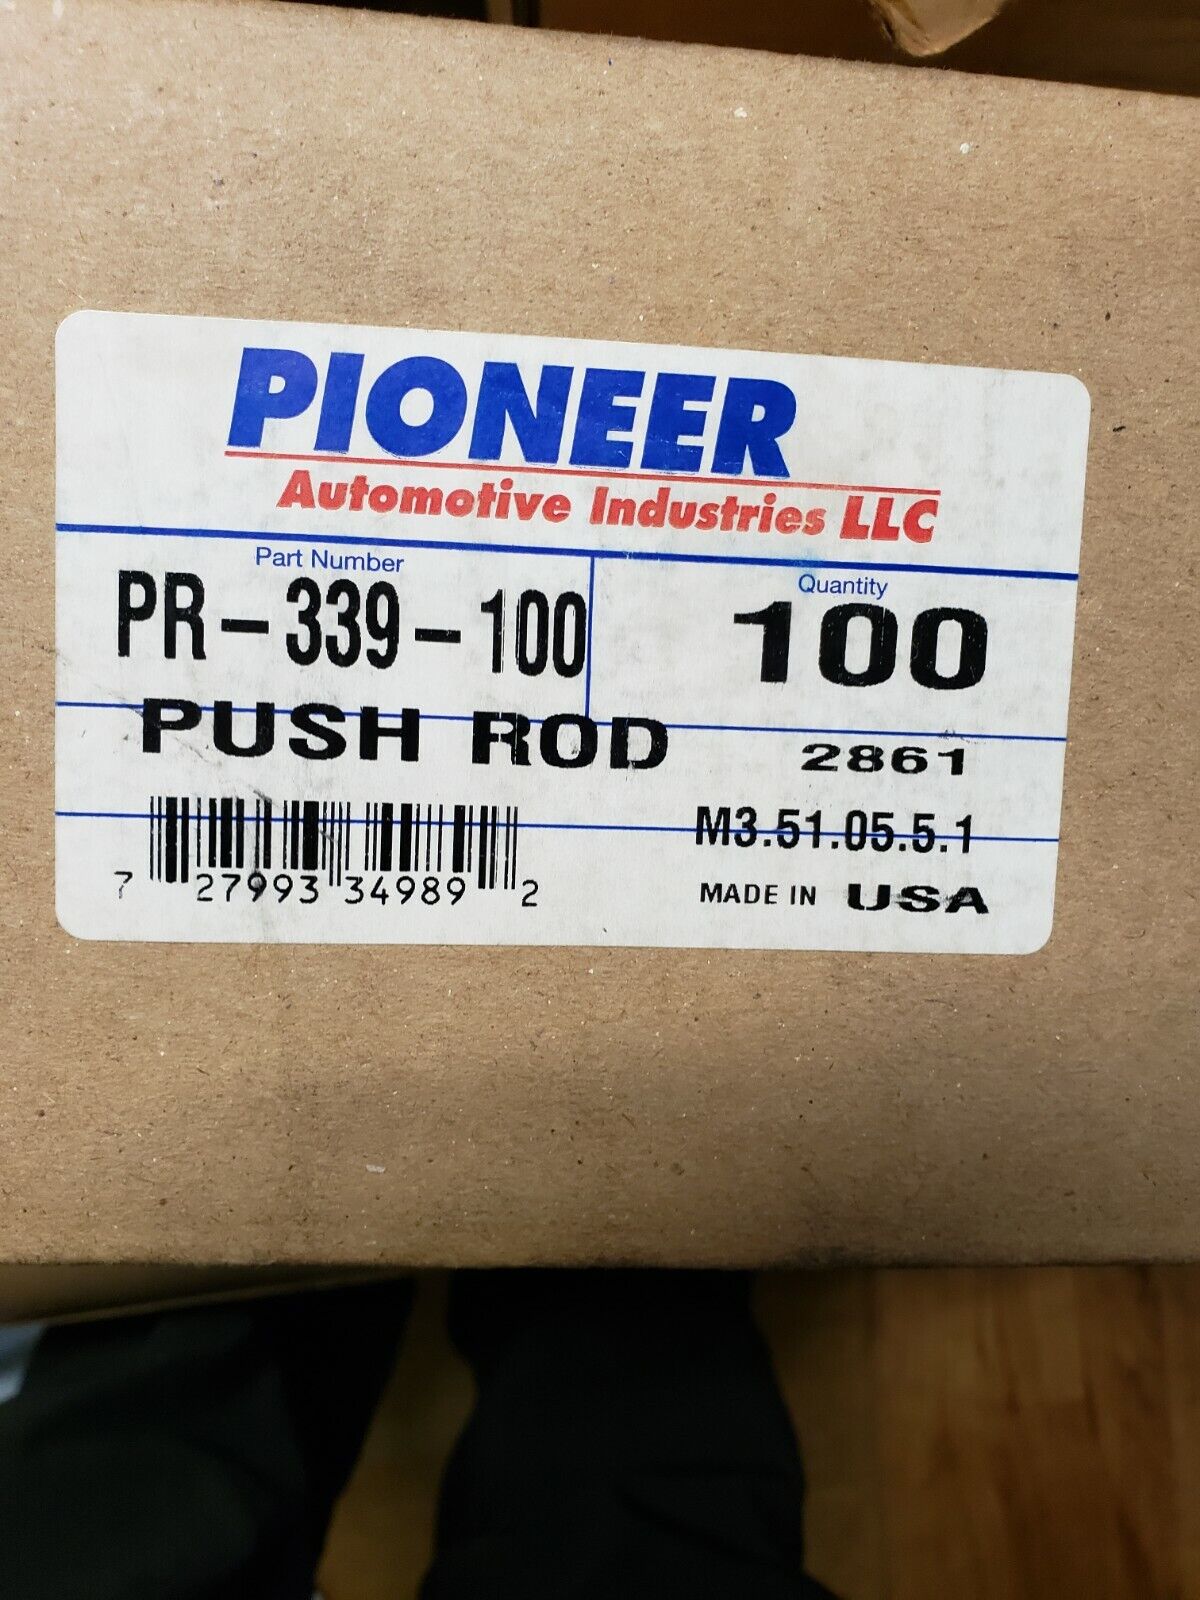 Push Rod   PR-339, PR-339-4, PR-339-100 Pioneer(lot of 100)   Ford